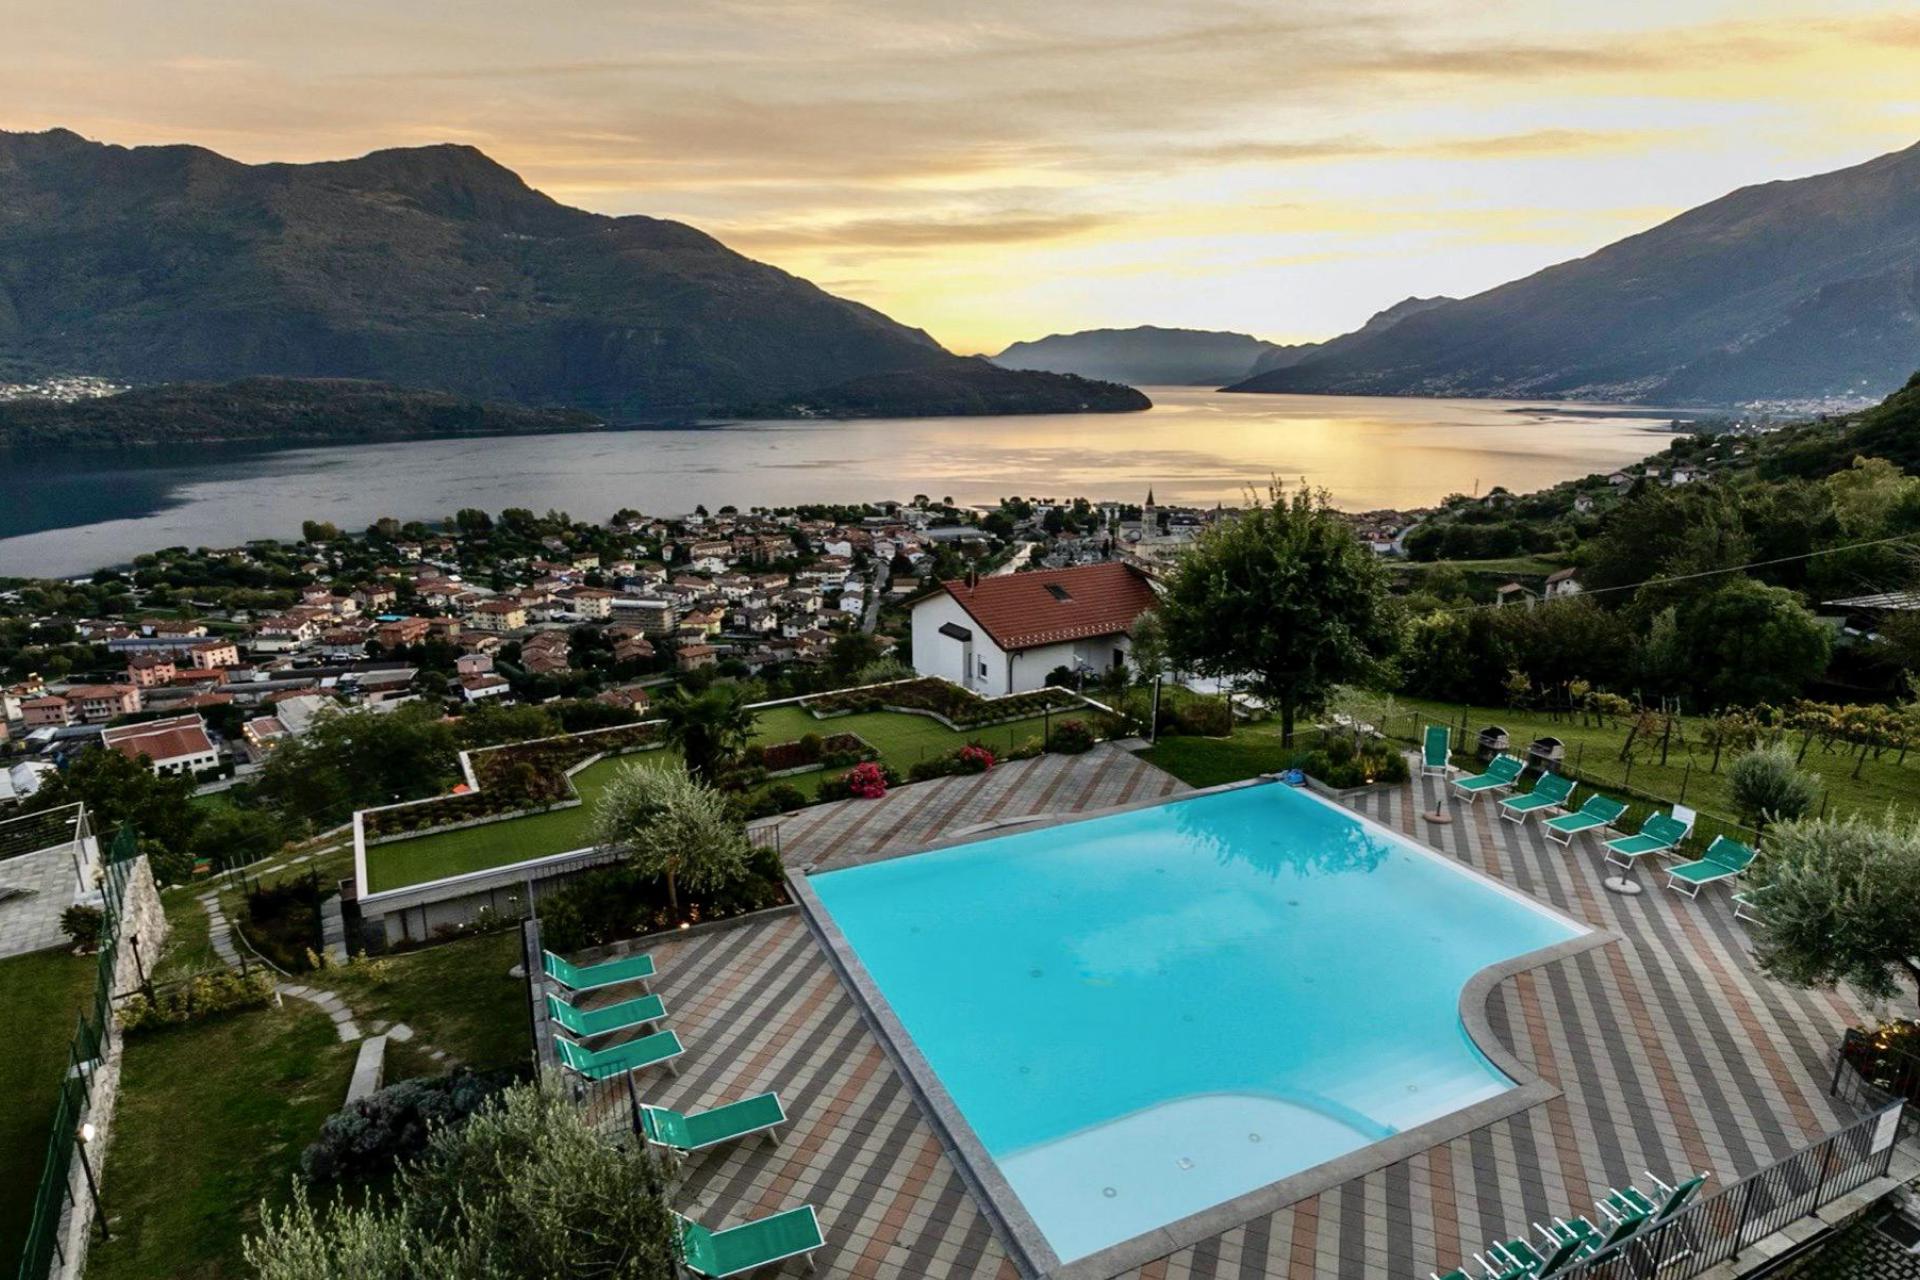 Residence near lively village on Lake Como